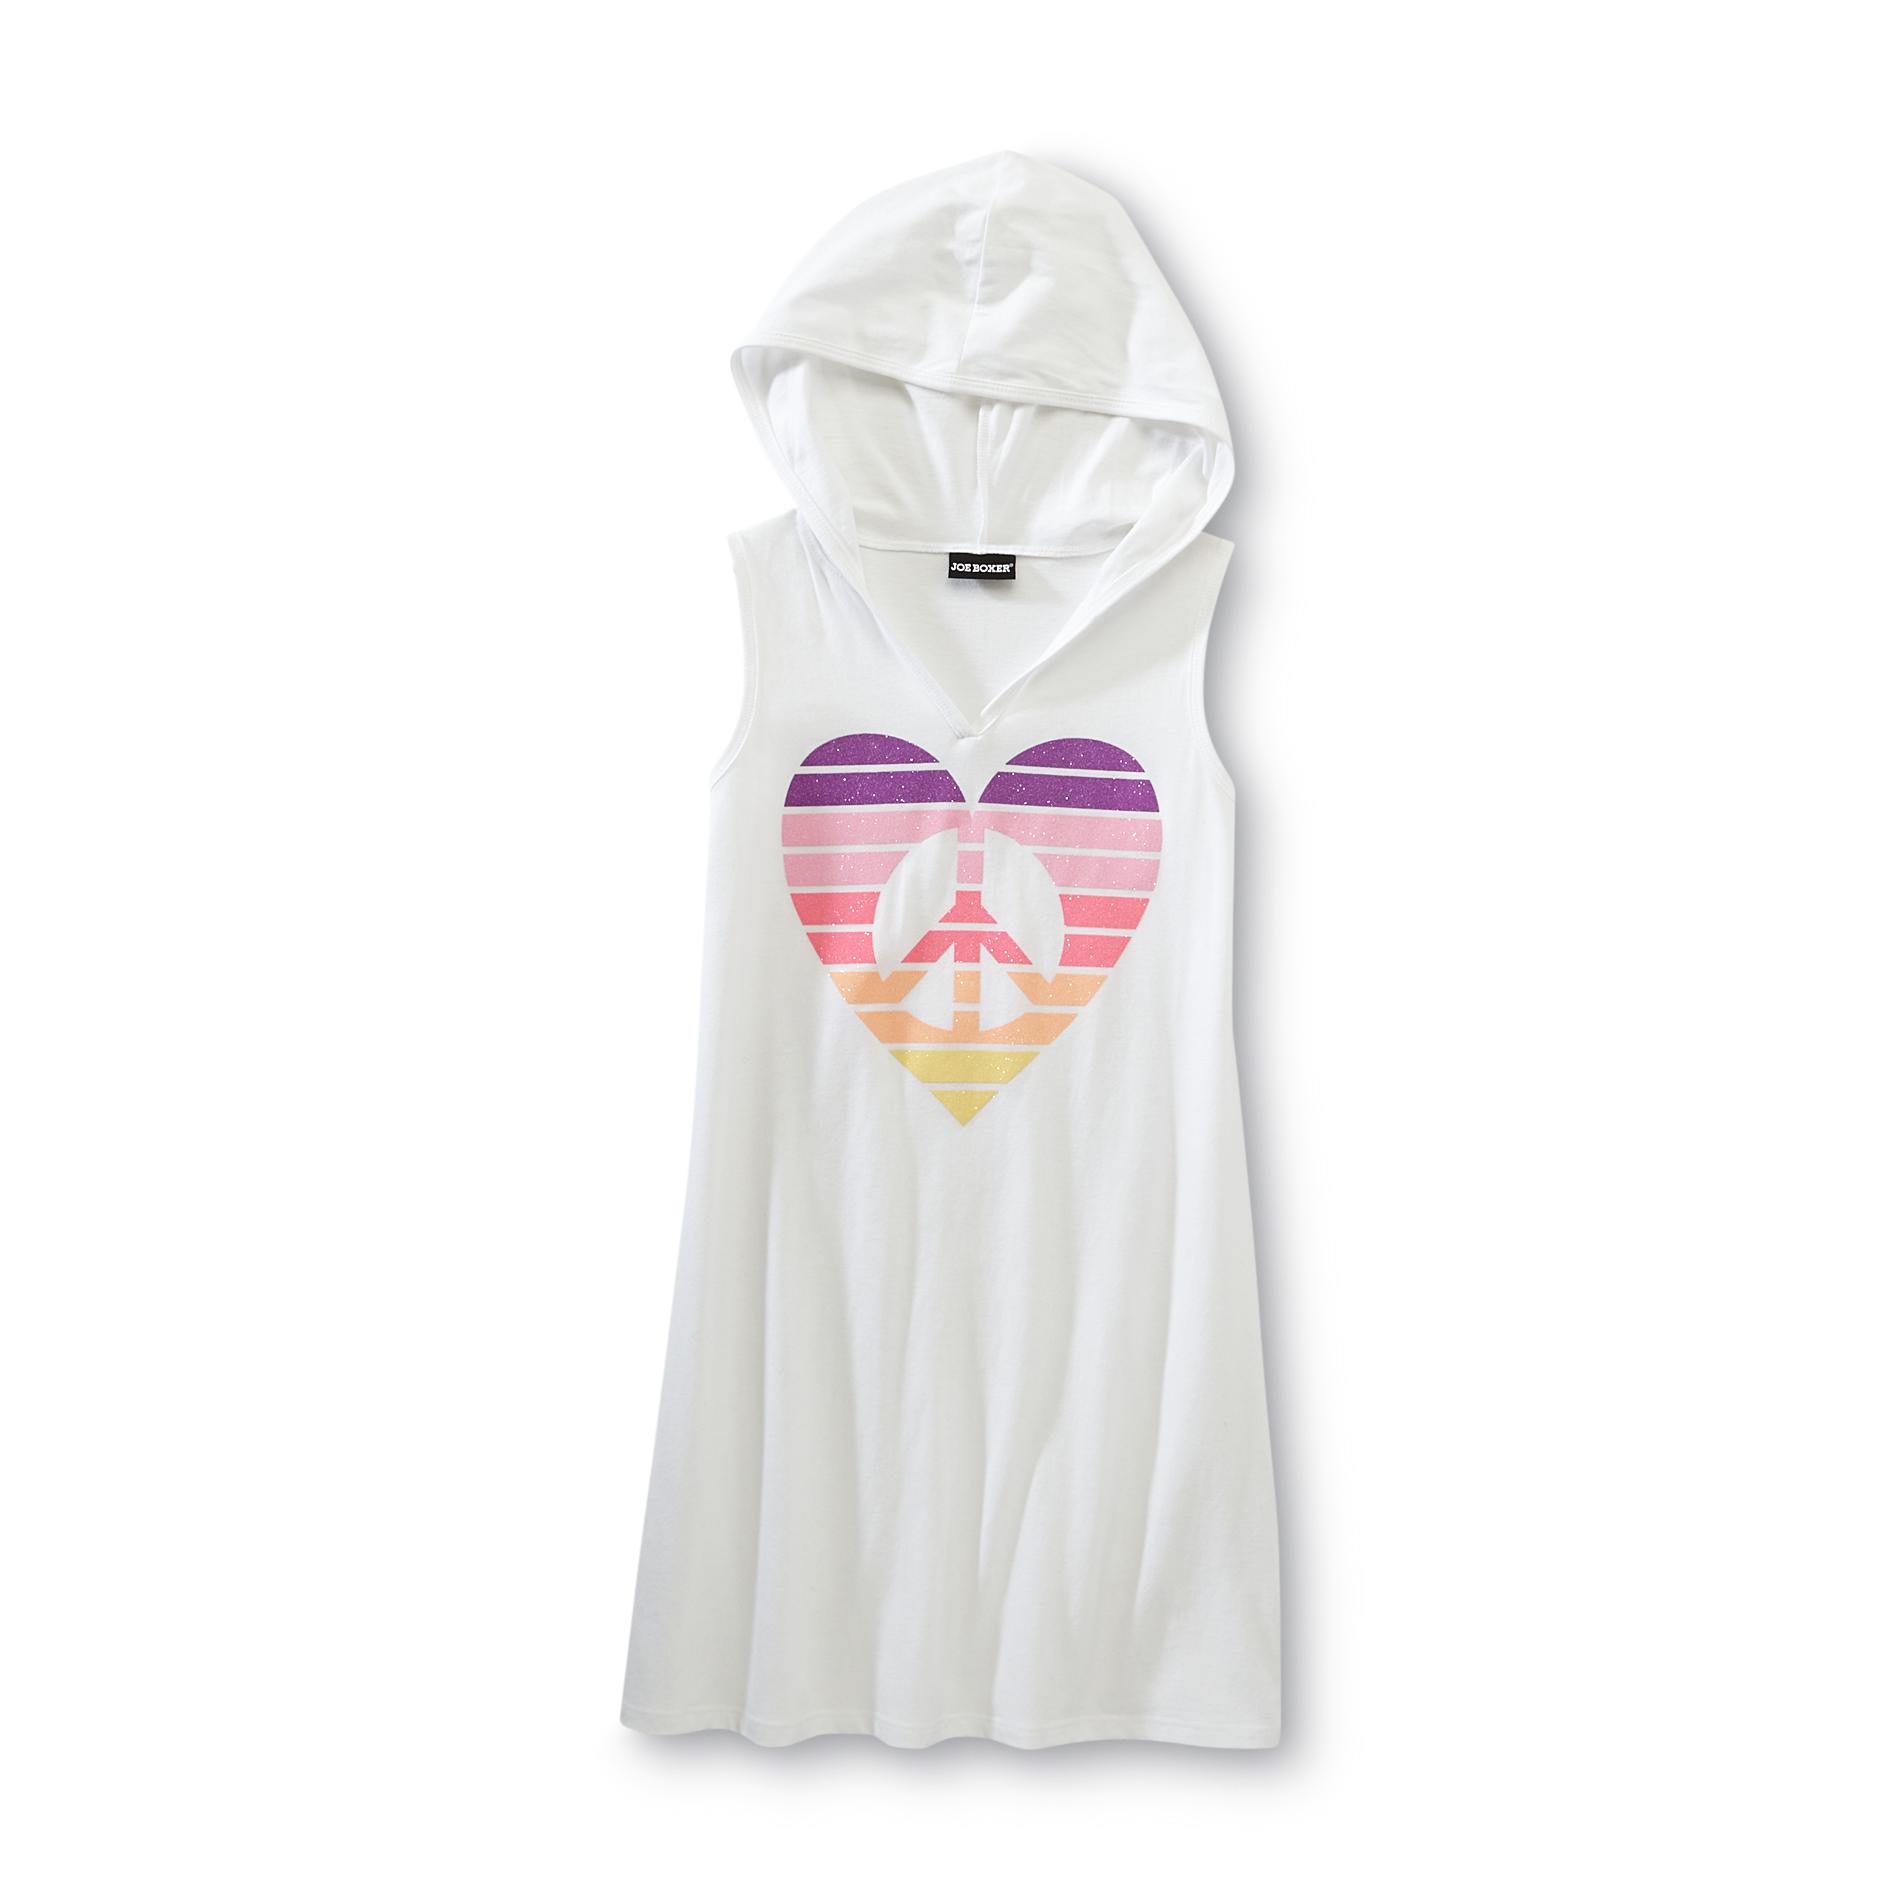 Joe Boxer Girl's Hooded Swim Cover-Up - Heart & Peace Sign